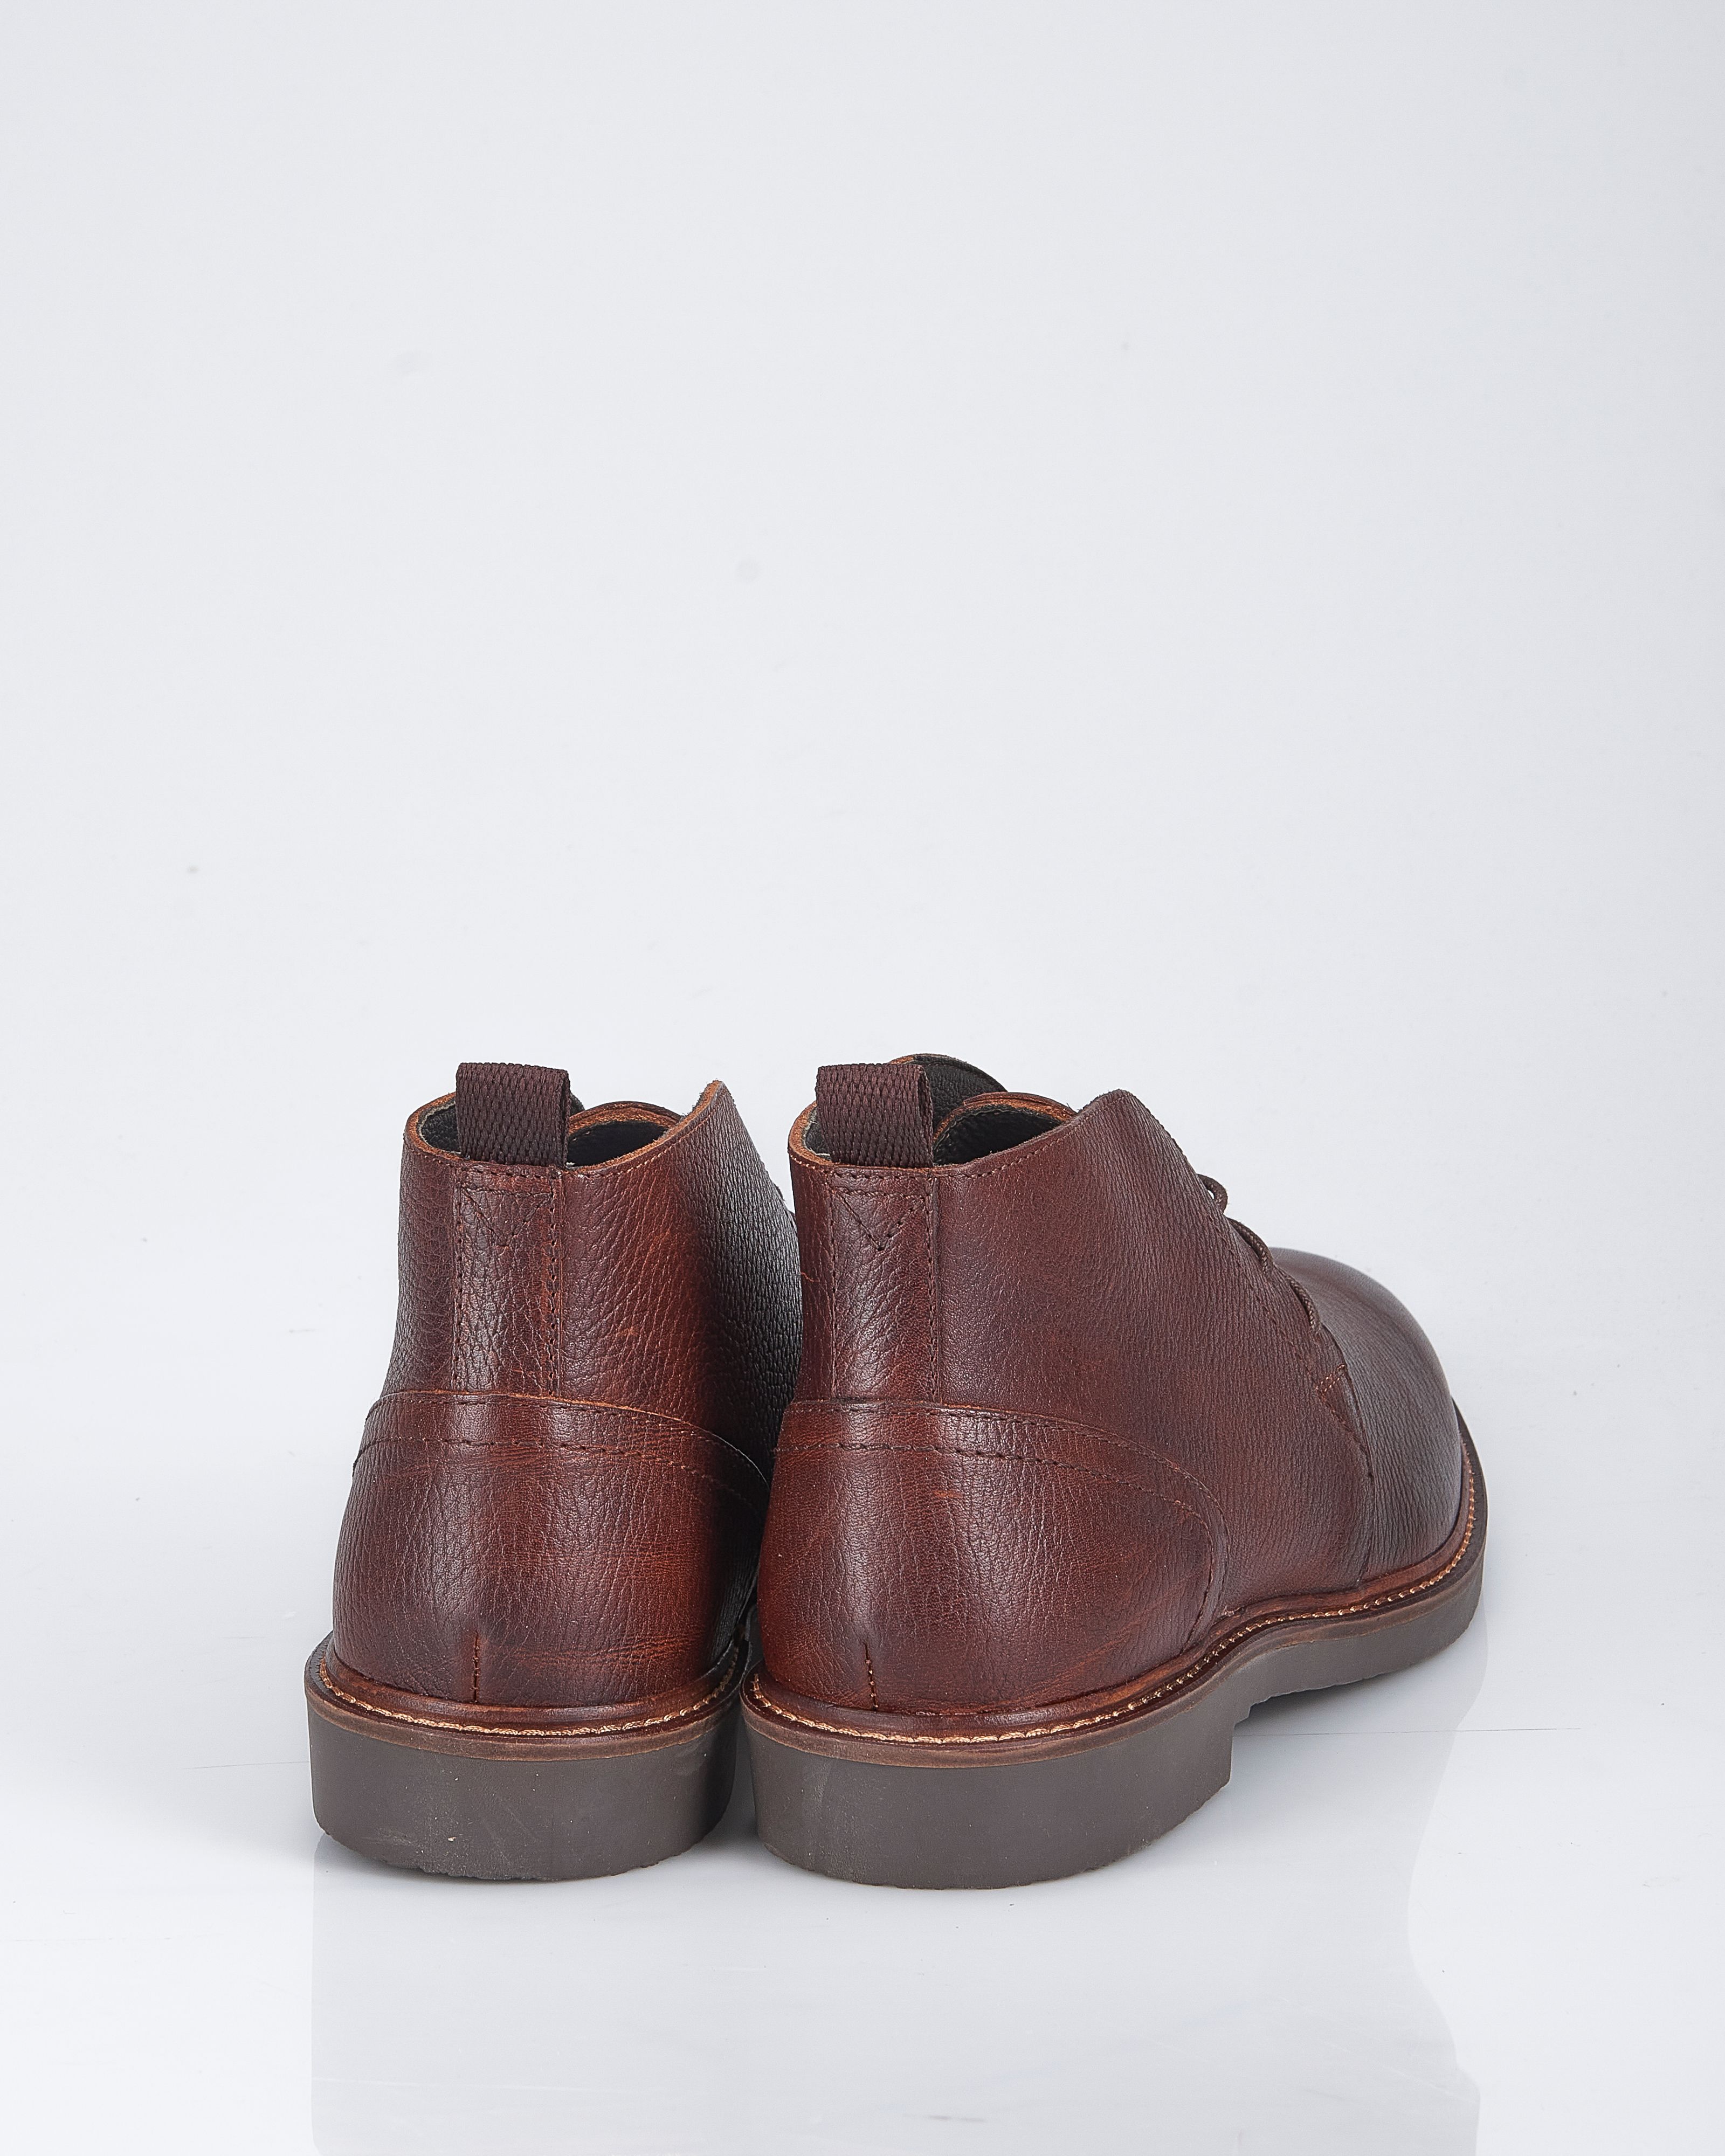 Campbell Classic Casual schoenen Chestnut 088303-001-41